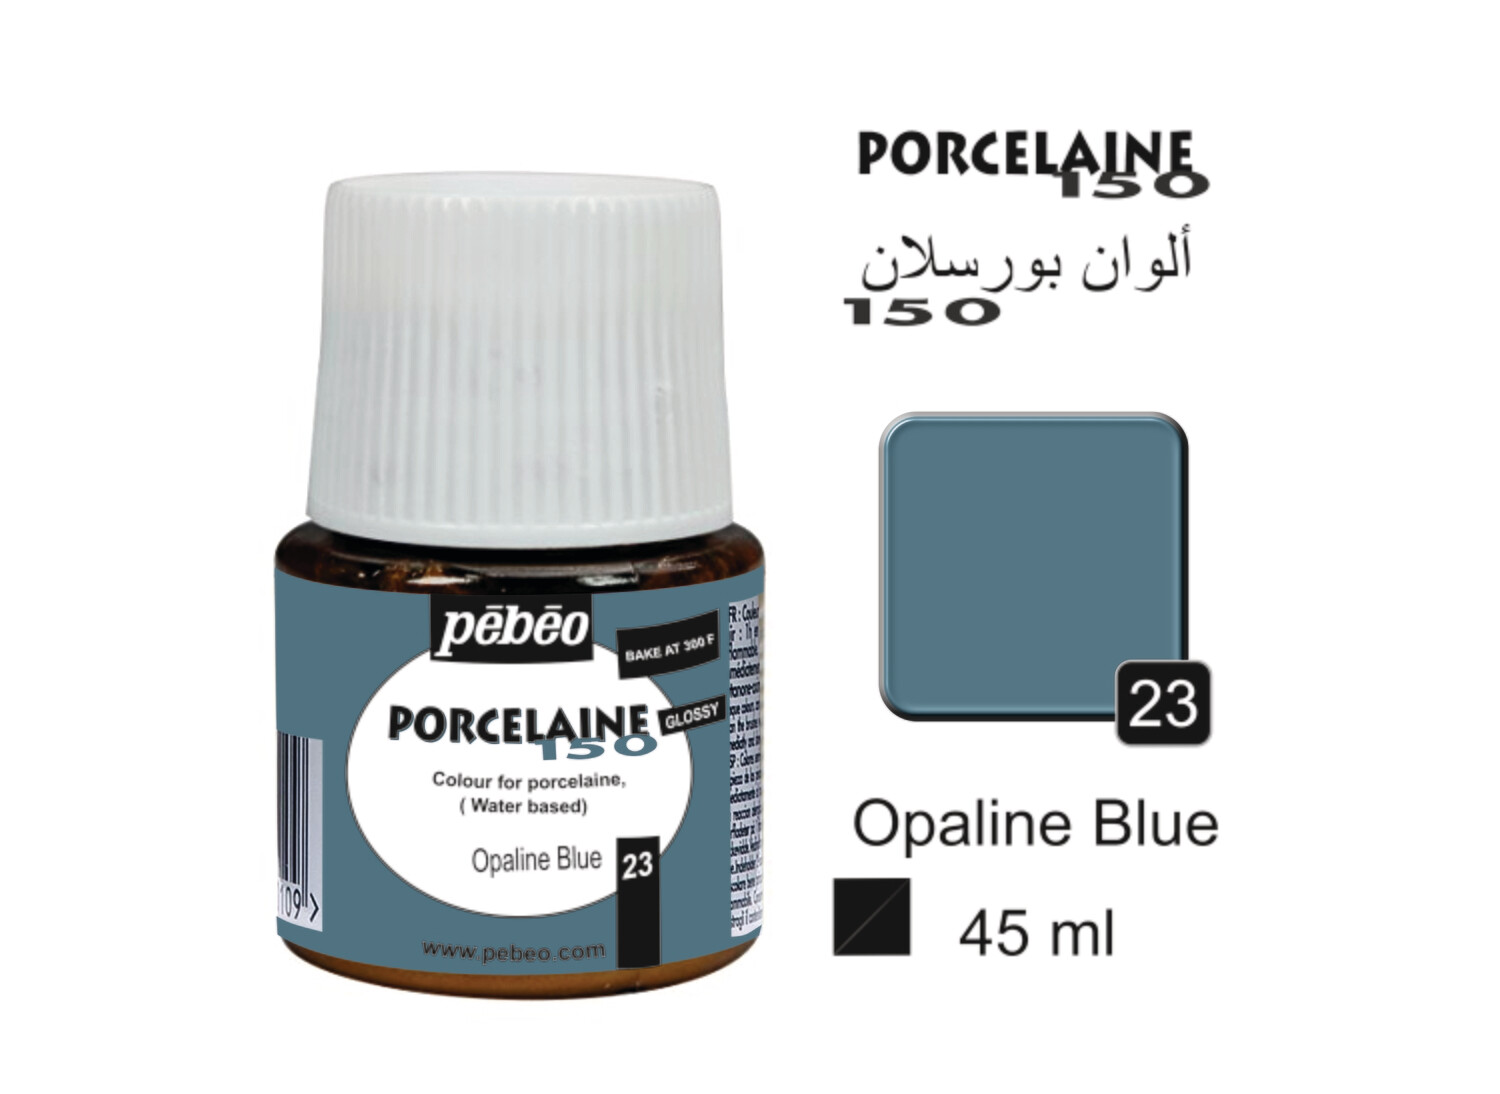 PORCELAINE 150, GLOSS 45 ml, Opaline blue No. 23